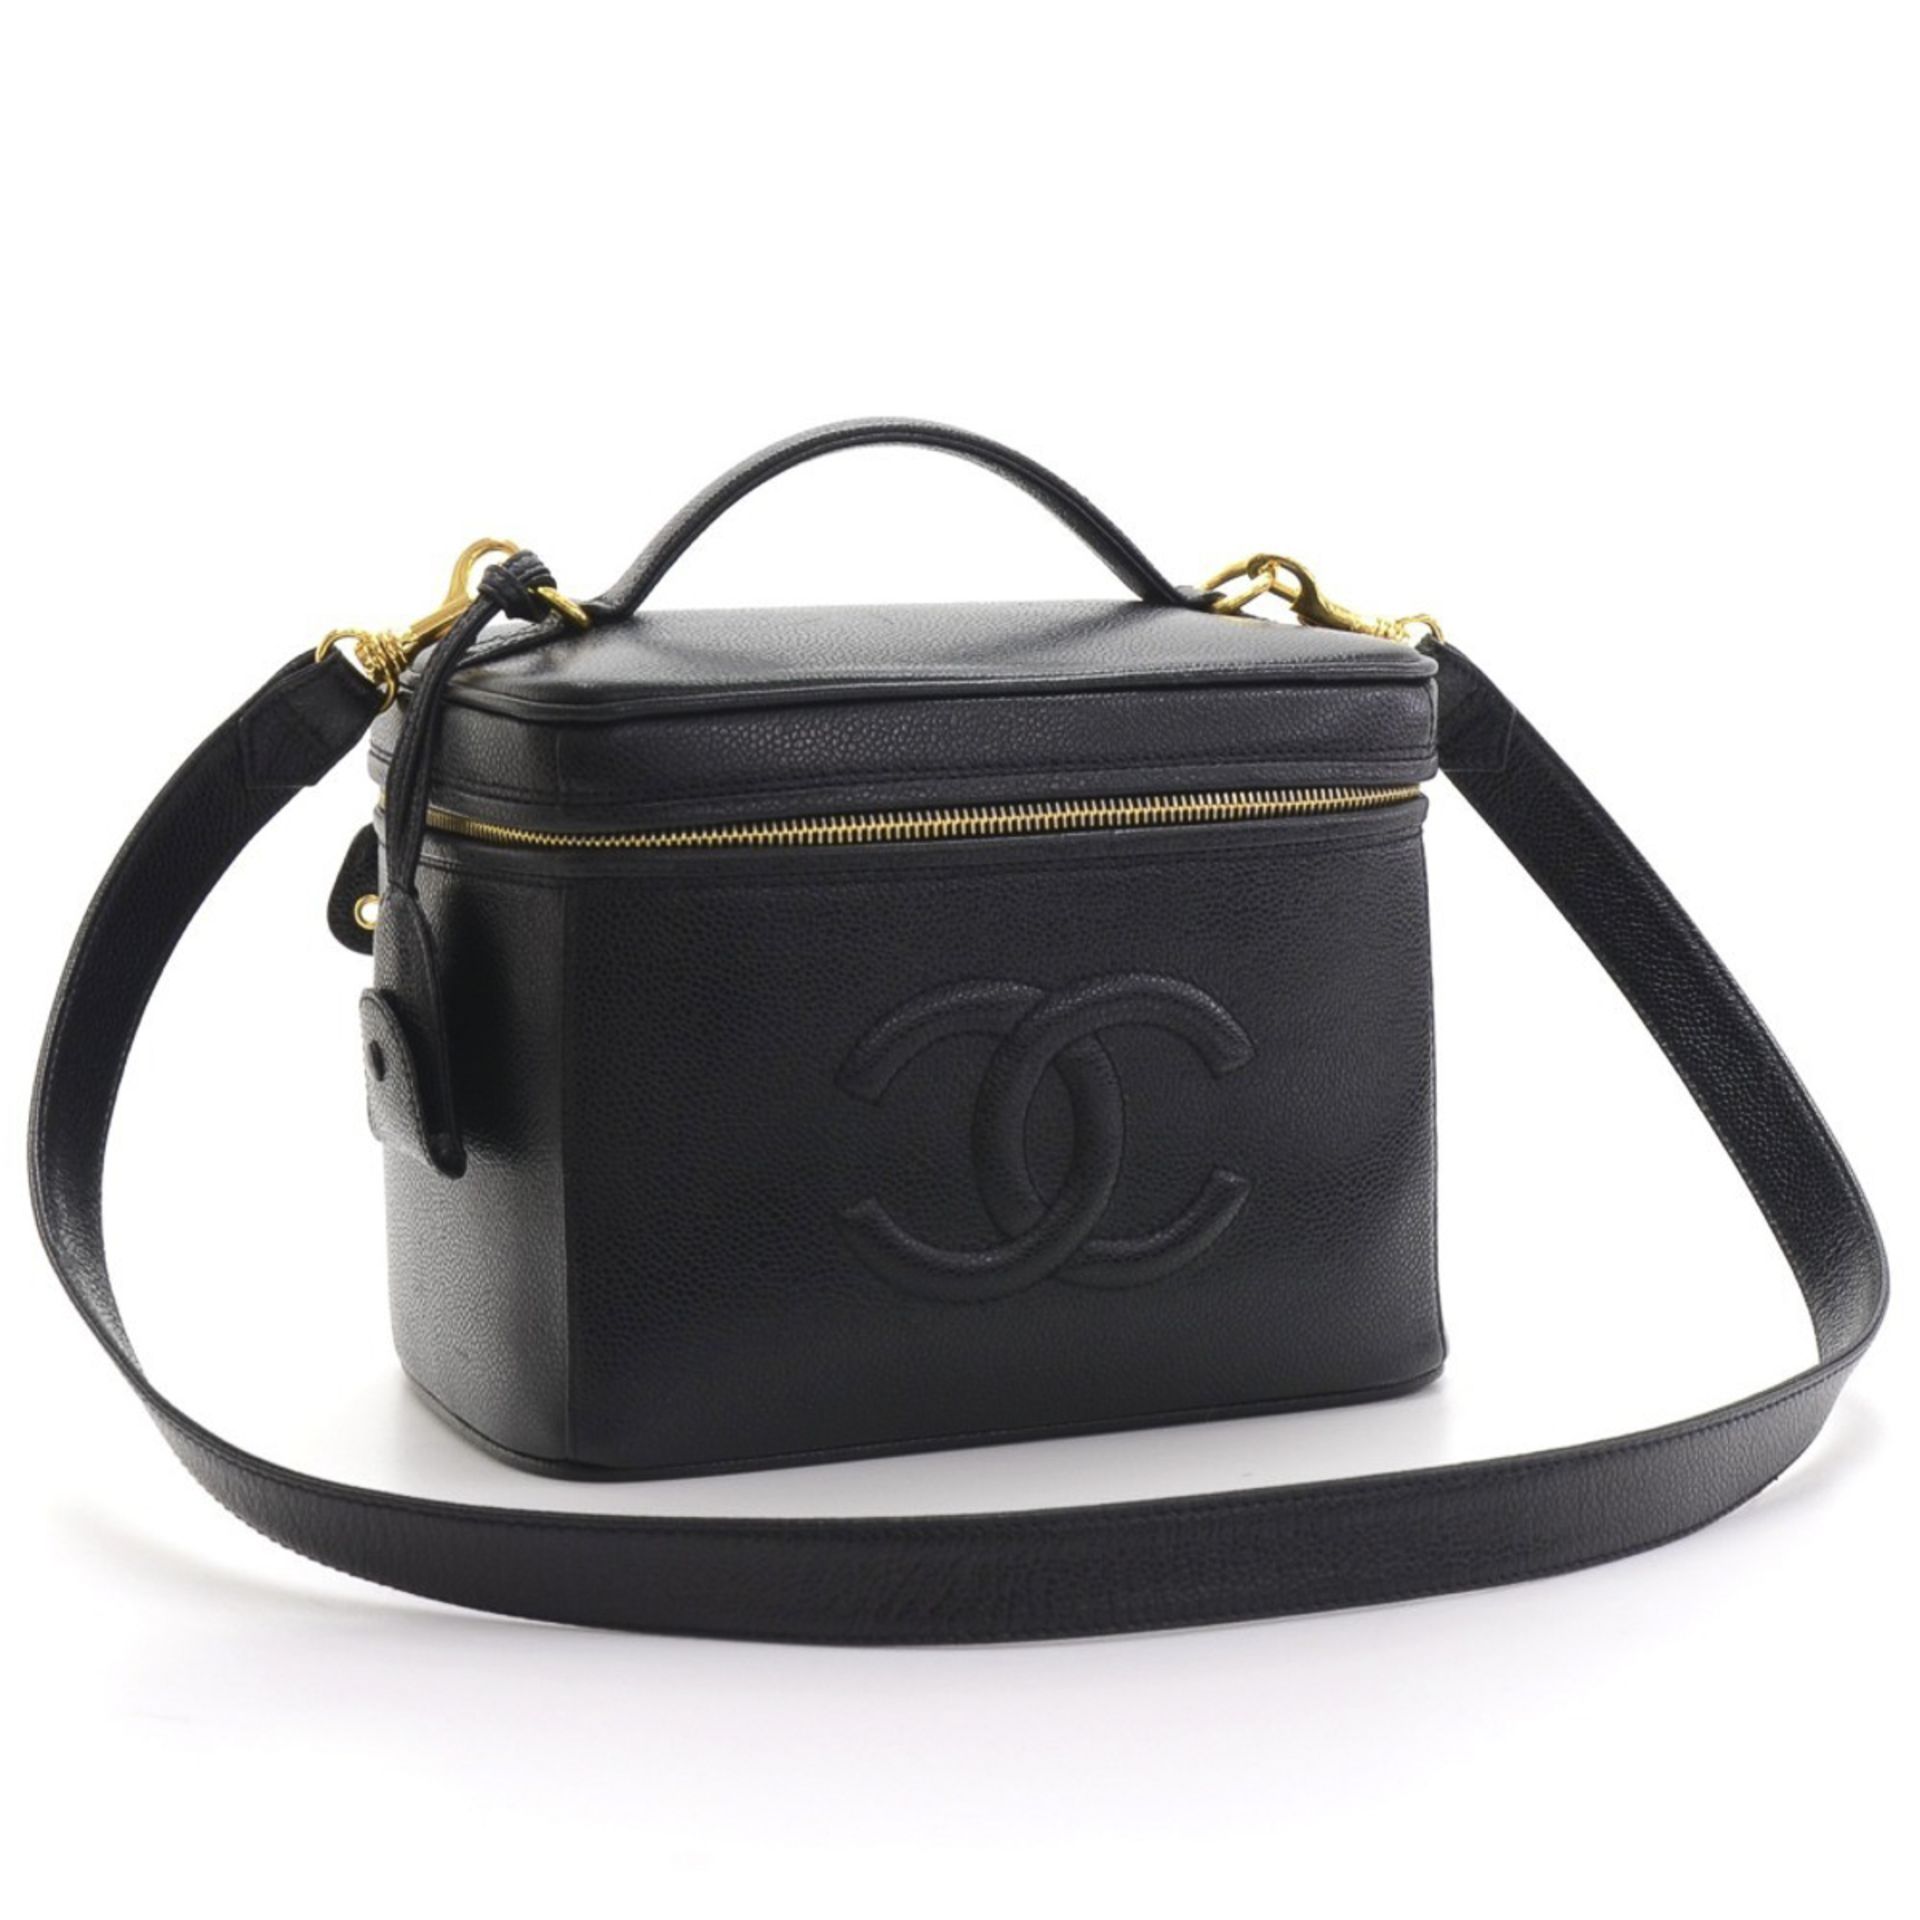 Chanel, Timeless Vanity Handbag - Image 12 of 14